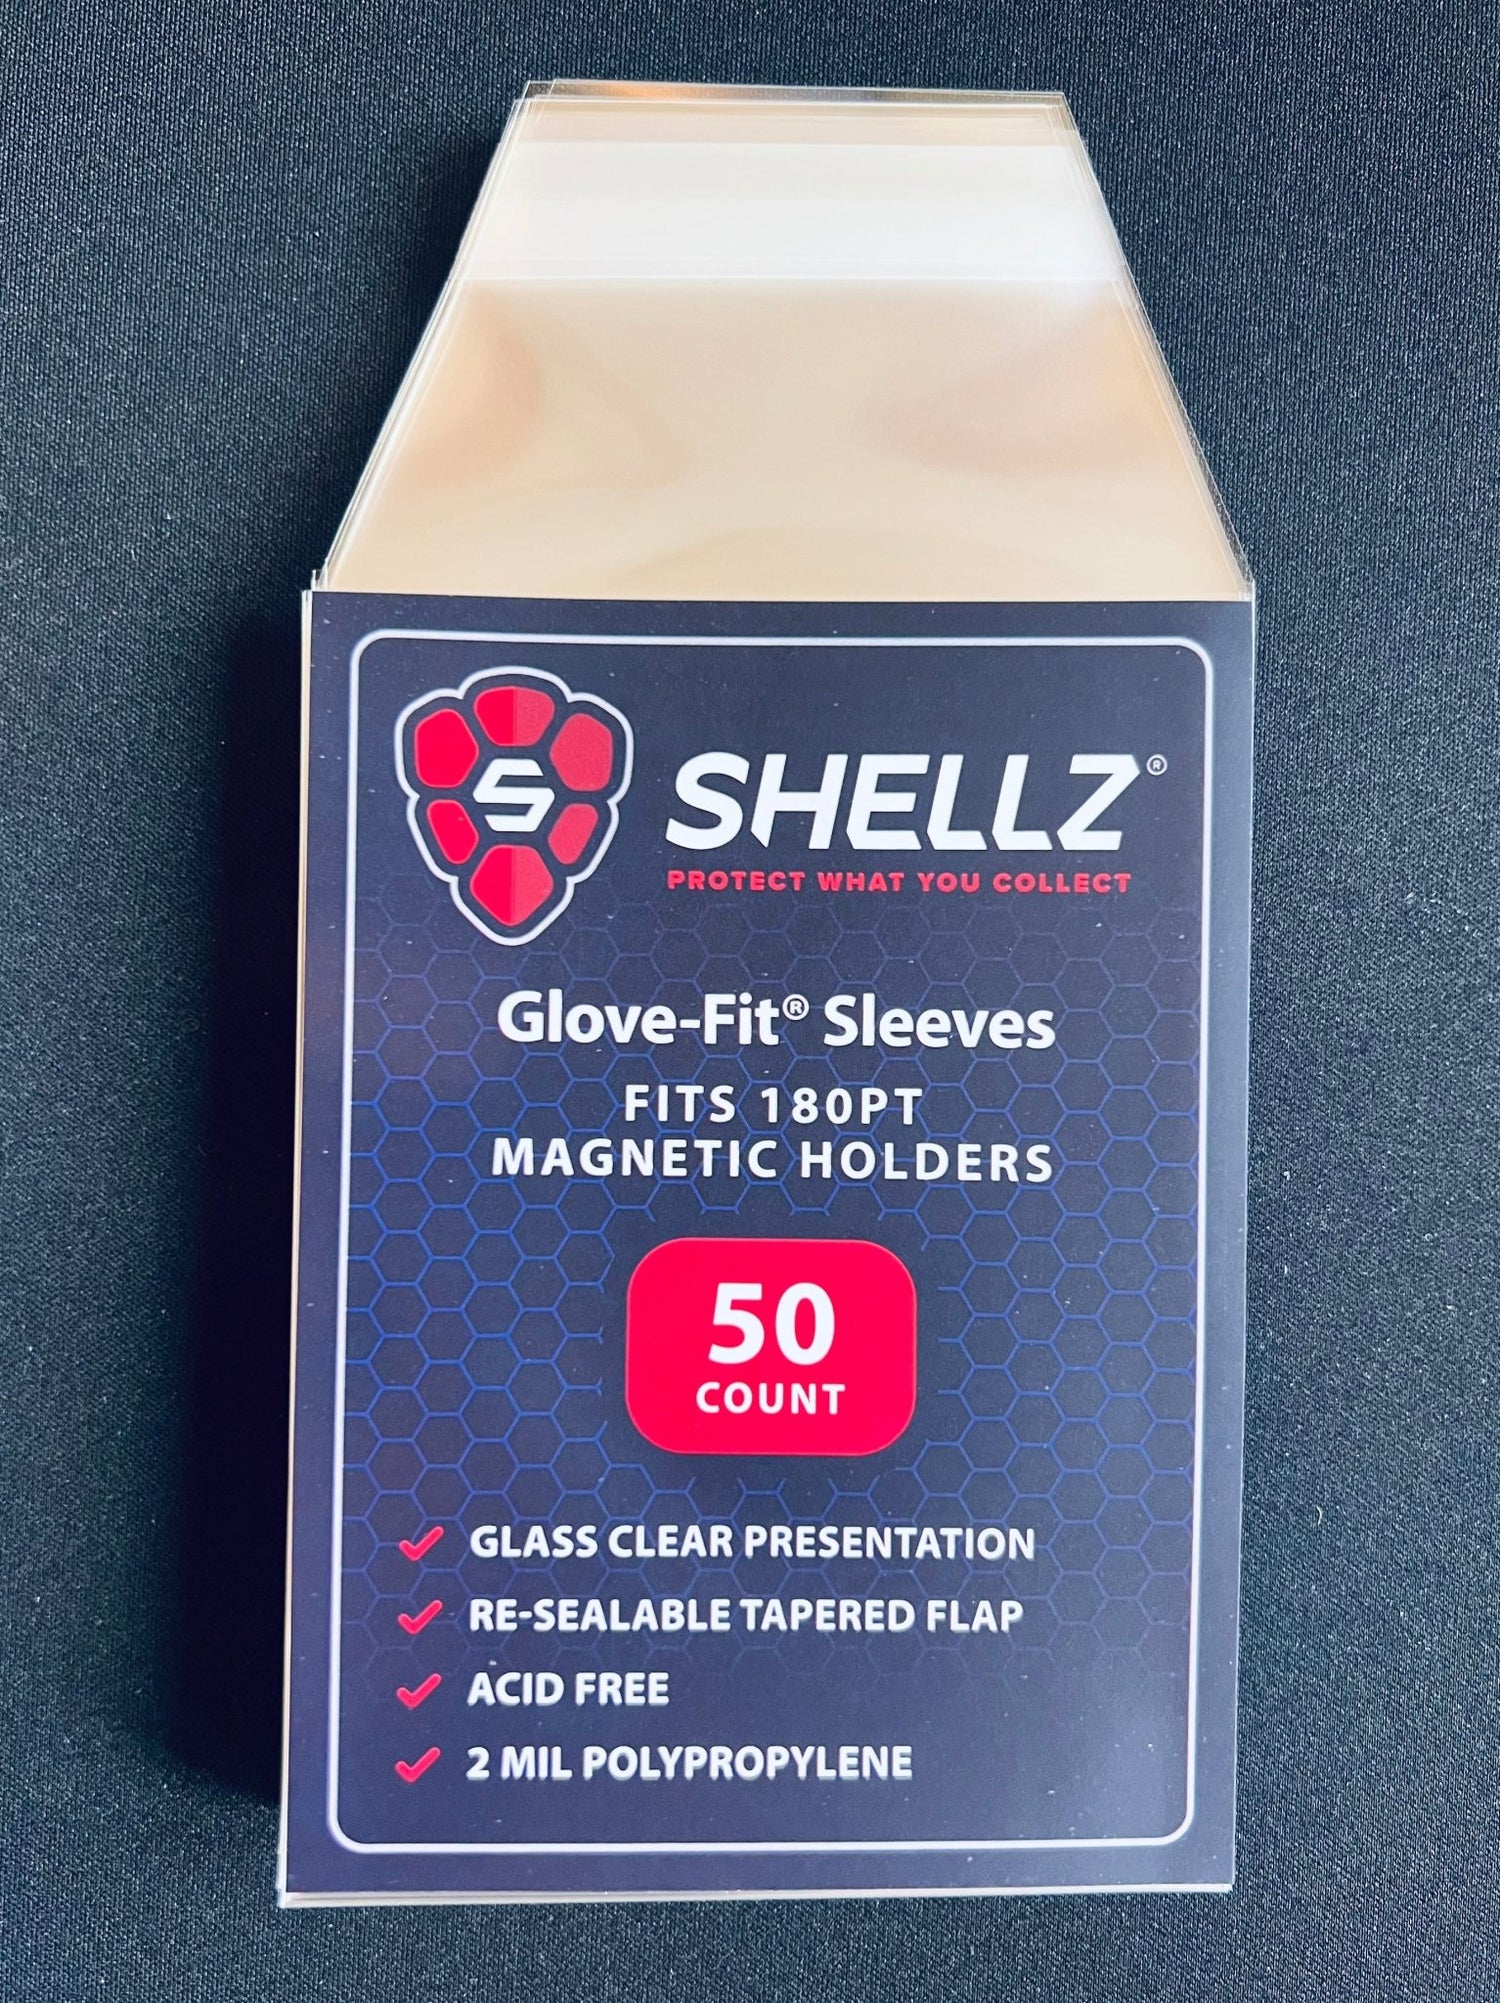 Glove-Fit Sleeves Magnetic Holders 180PT - Cardshellz